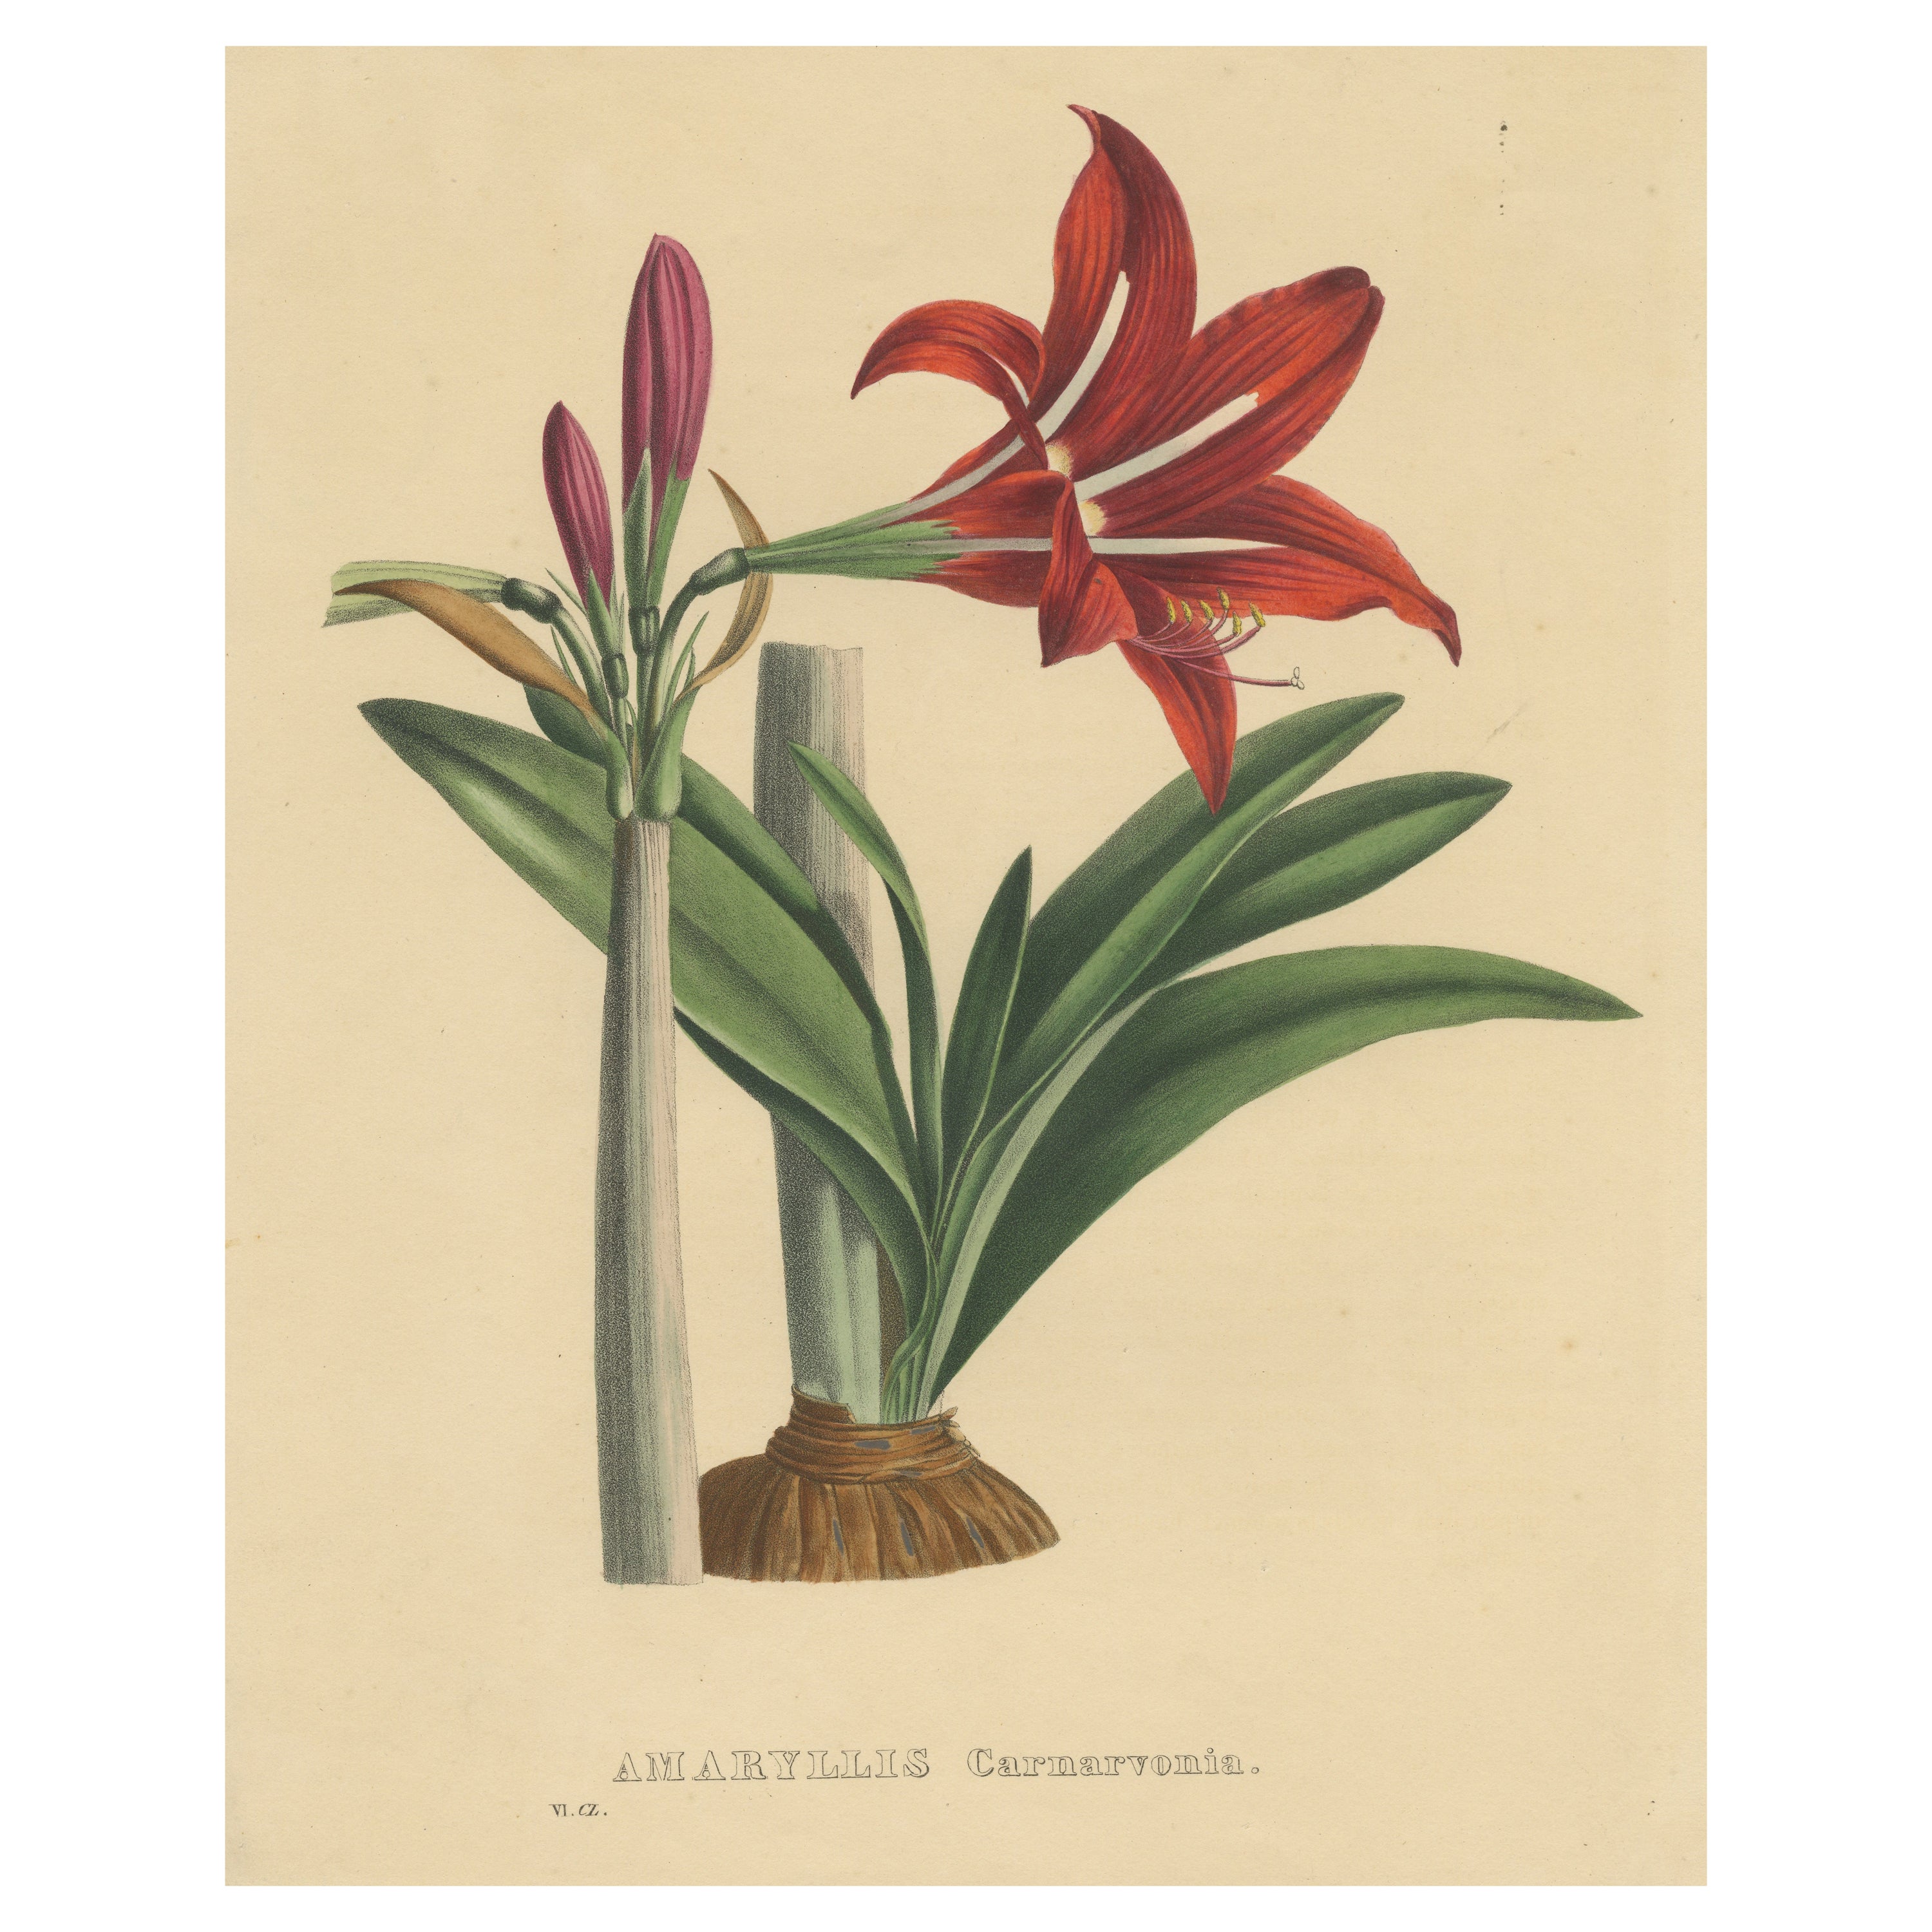 Antique Botanical Print of an Amaryllis species